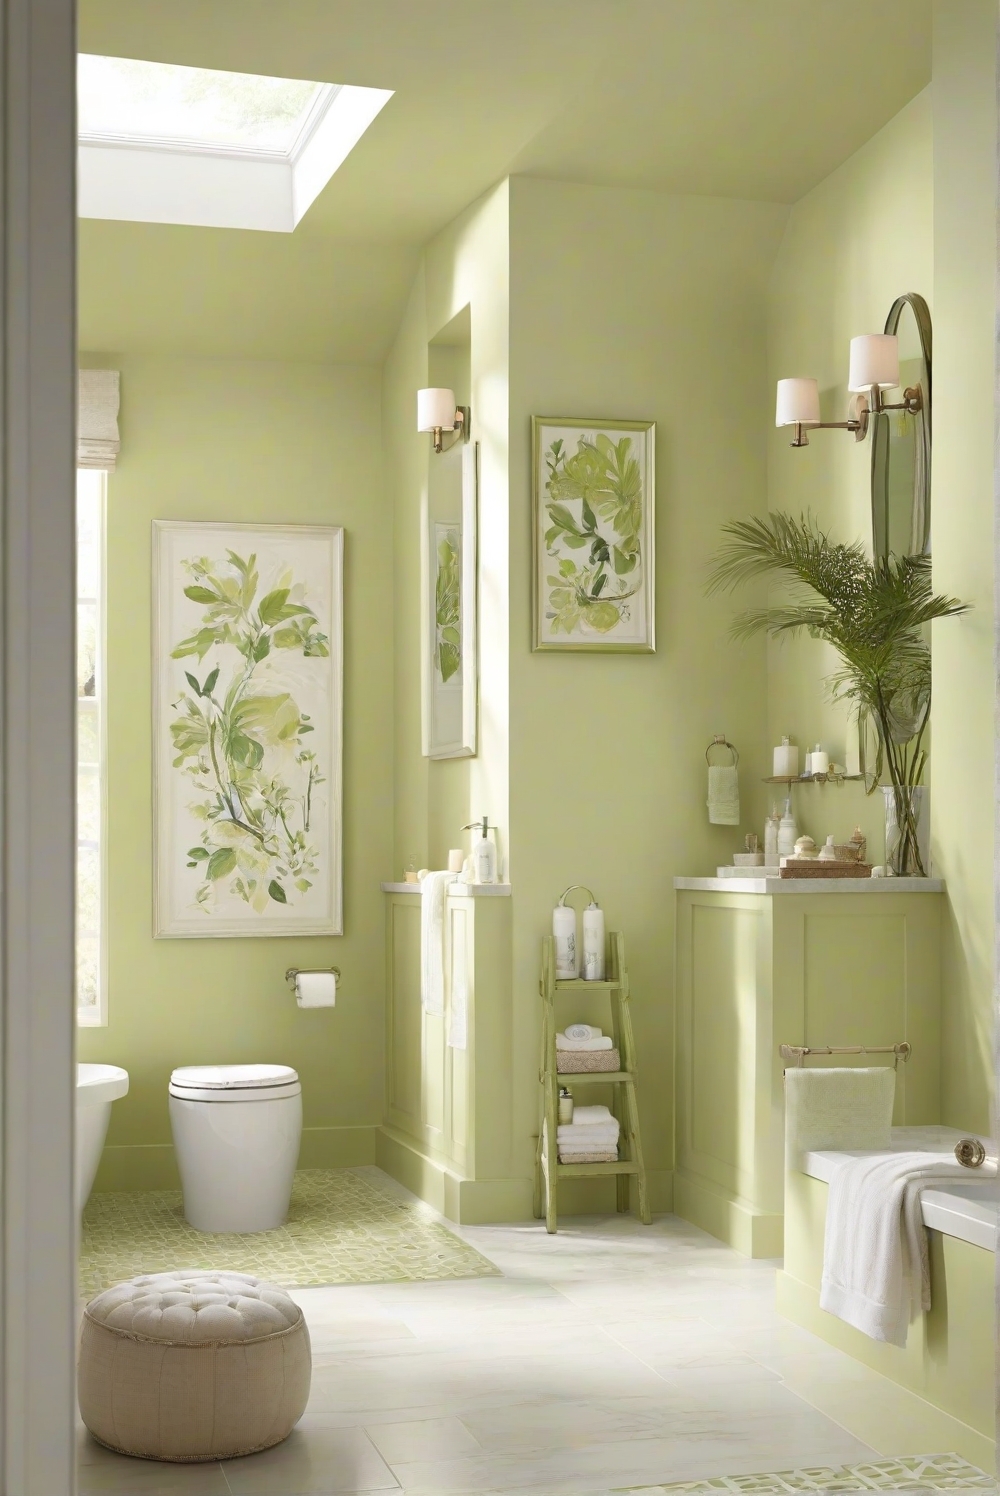 Zesty key lime paint, Key lime bathroom decor, Lime green bathroom, Lime color interior design, Fresh bathroom paint ideas, Key lime wall paint, Lime themed bathroom design